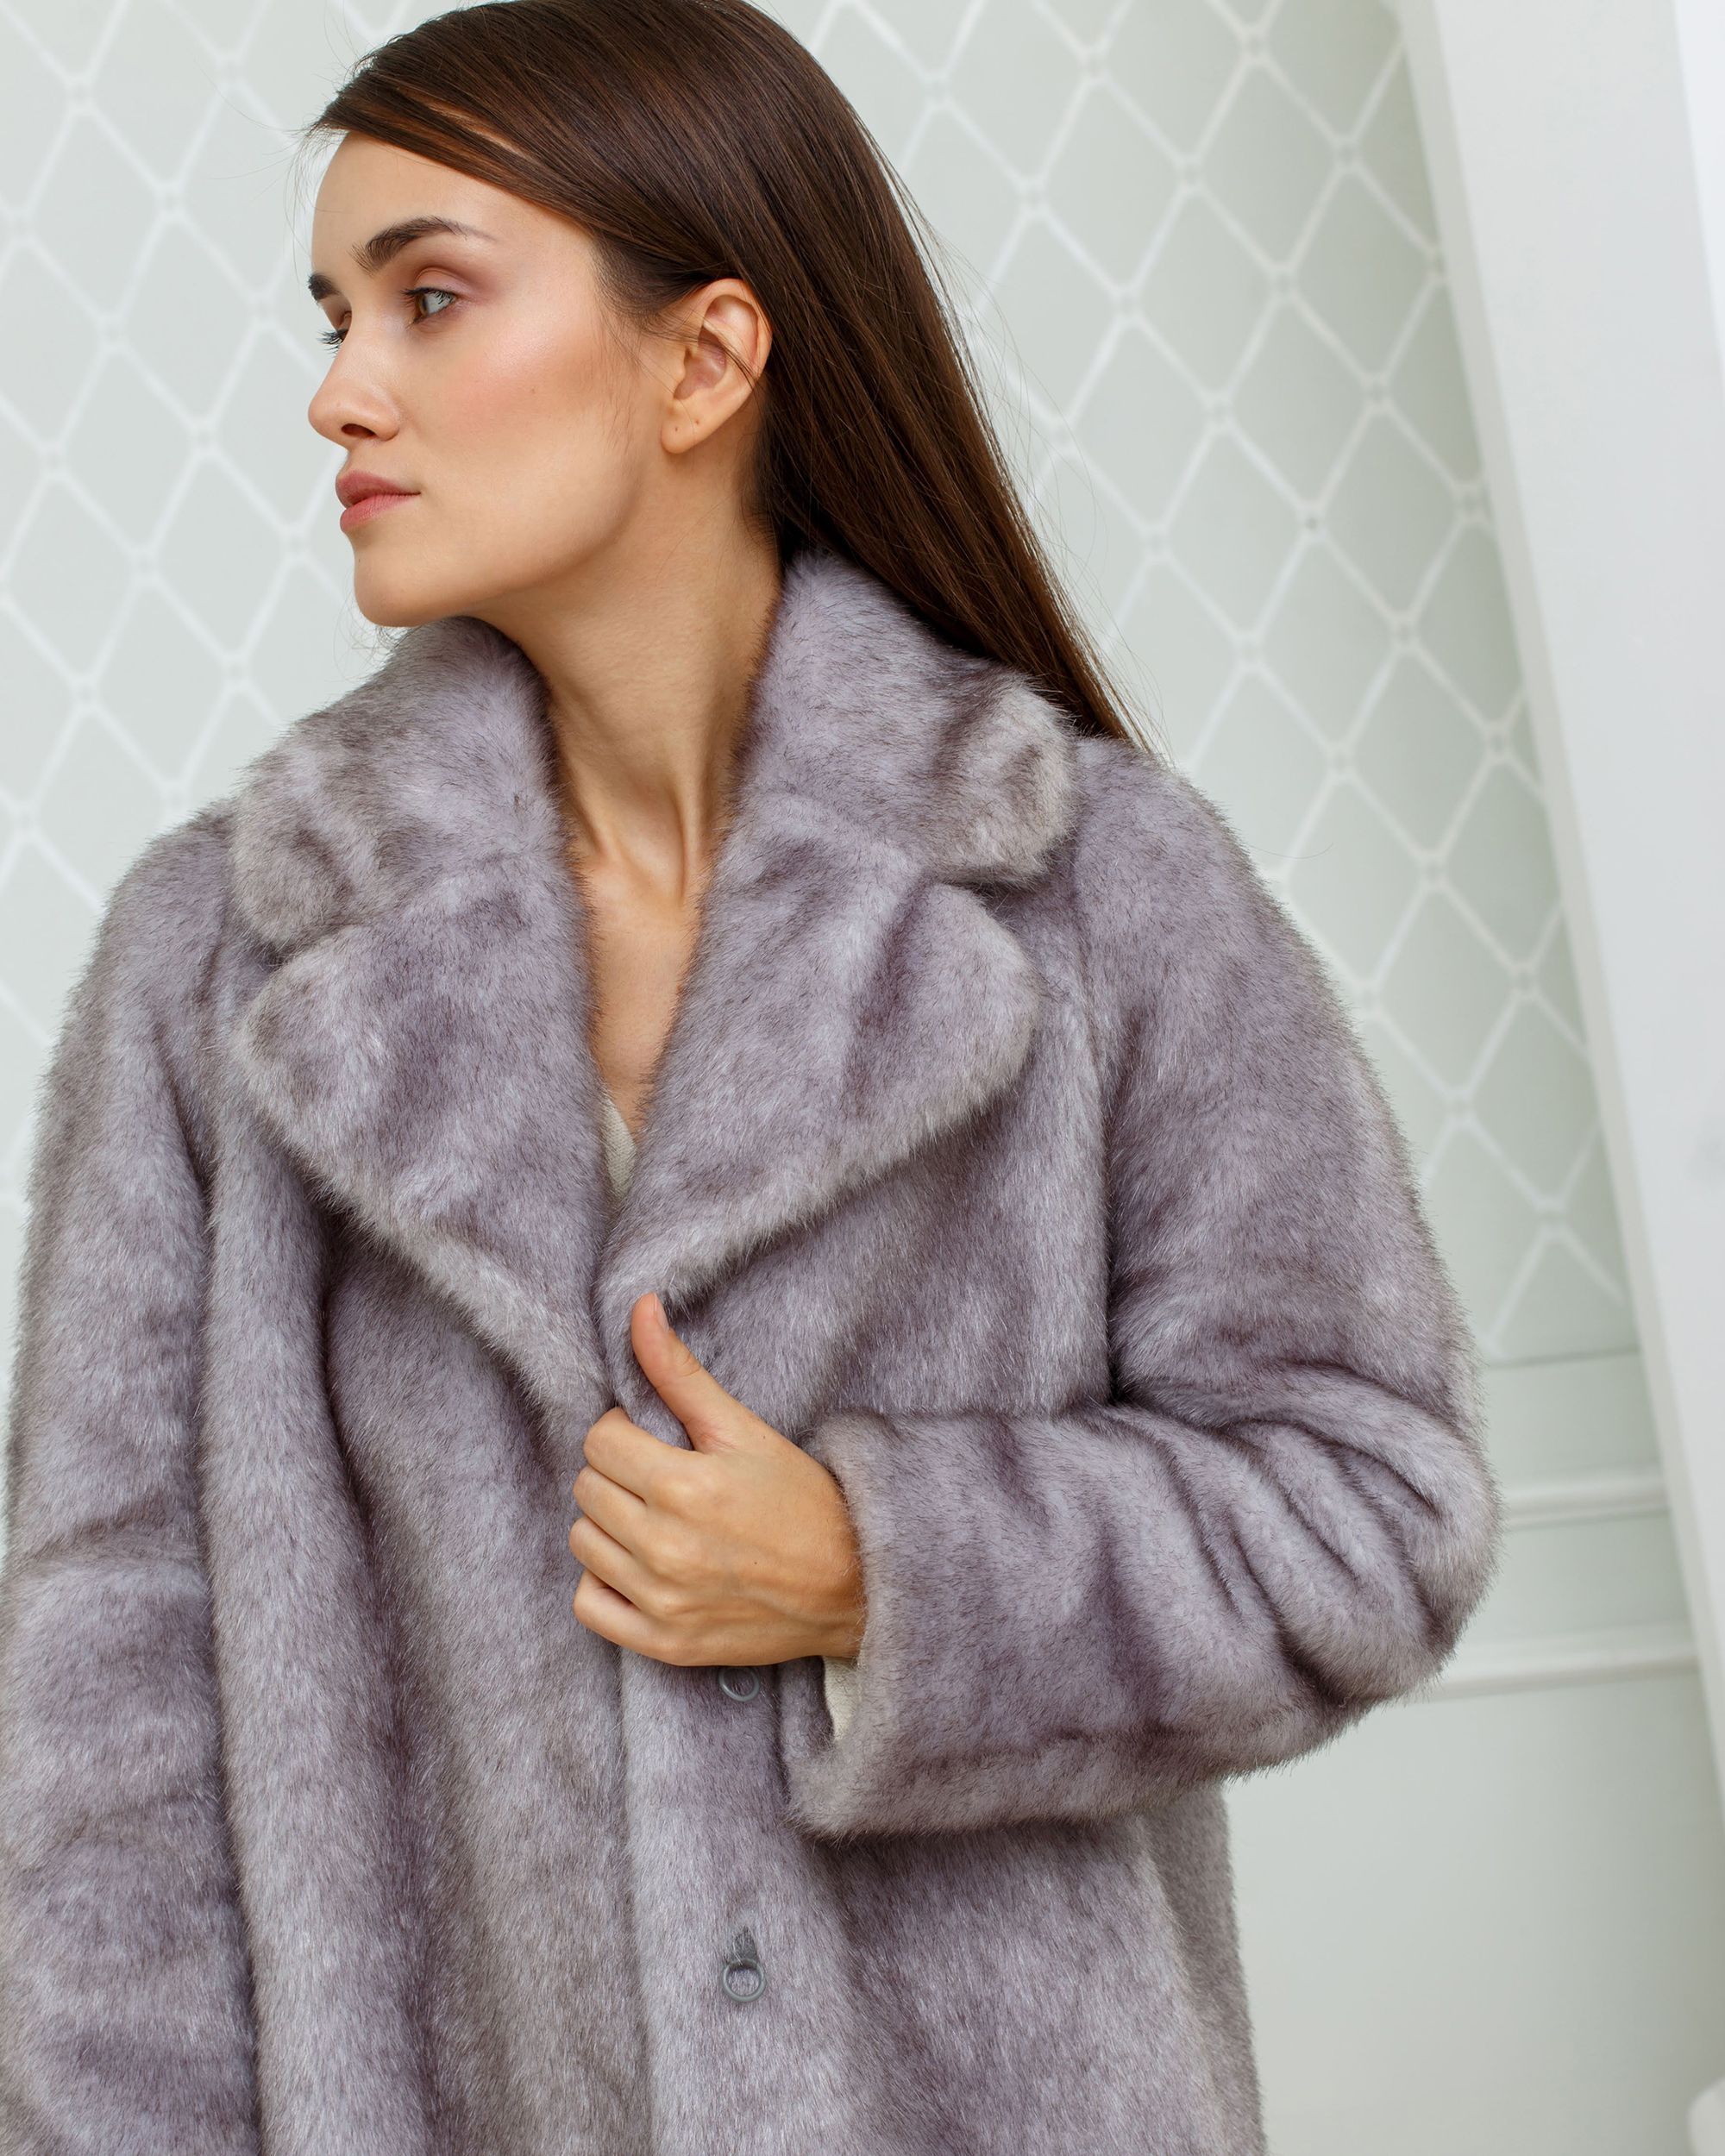 Fur coat, pattern №391 buy on-line